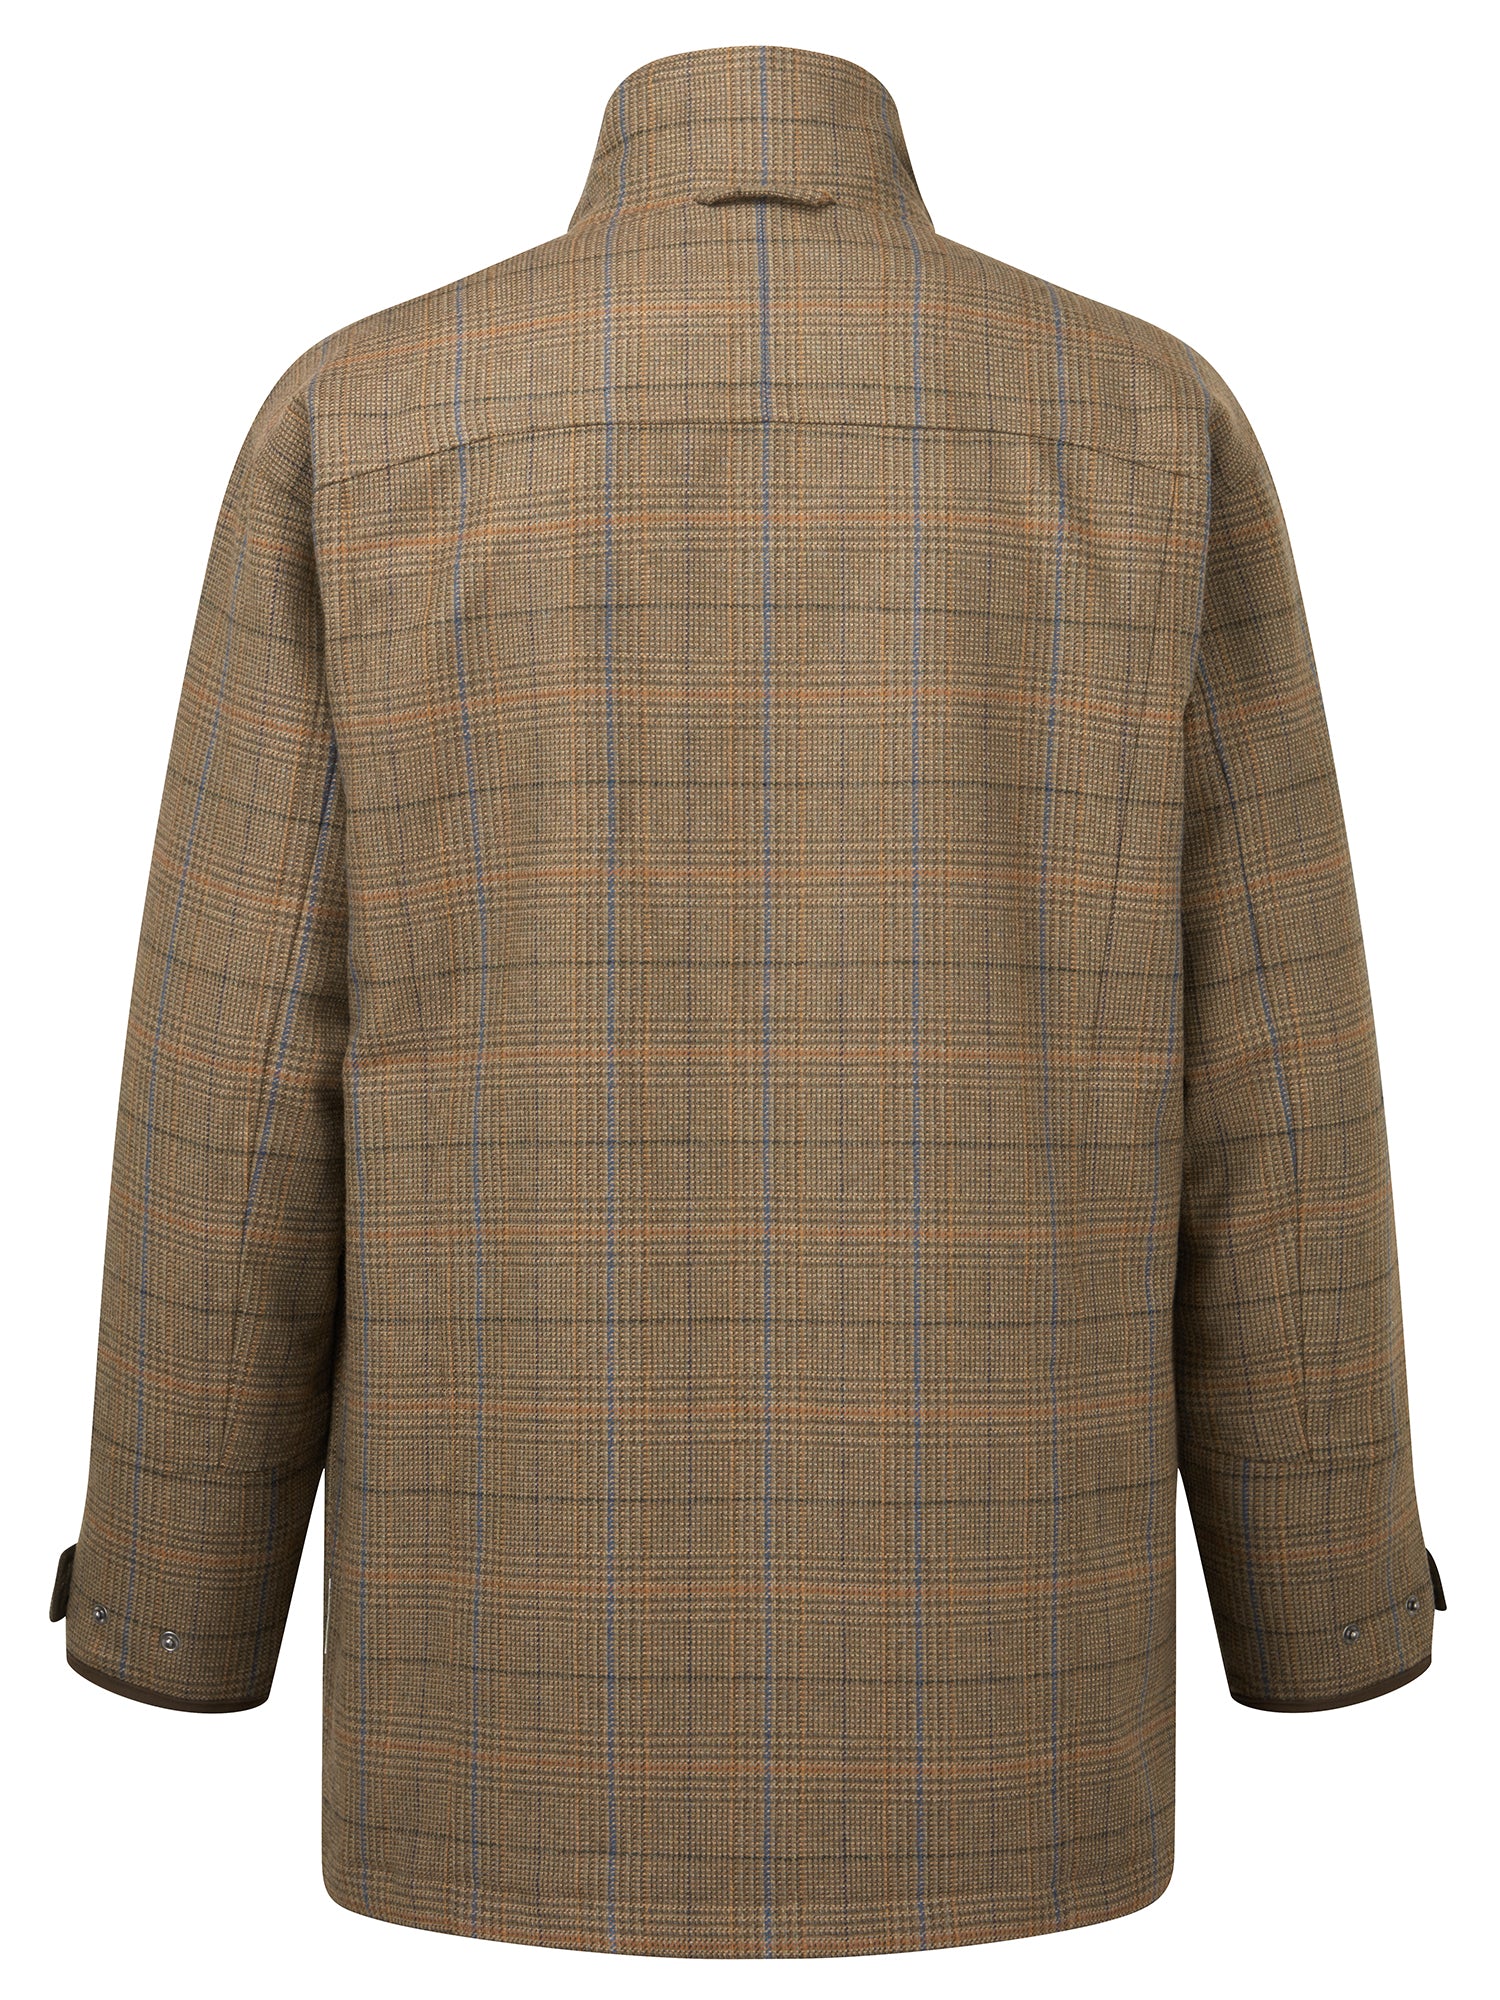 Ptarmigan Tweed Classic Coat - Arran Tweed